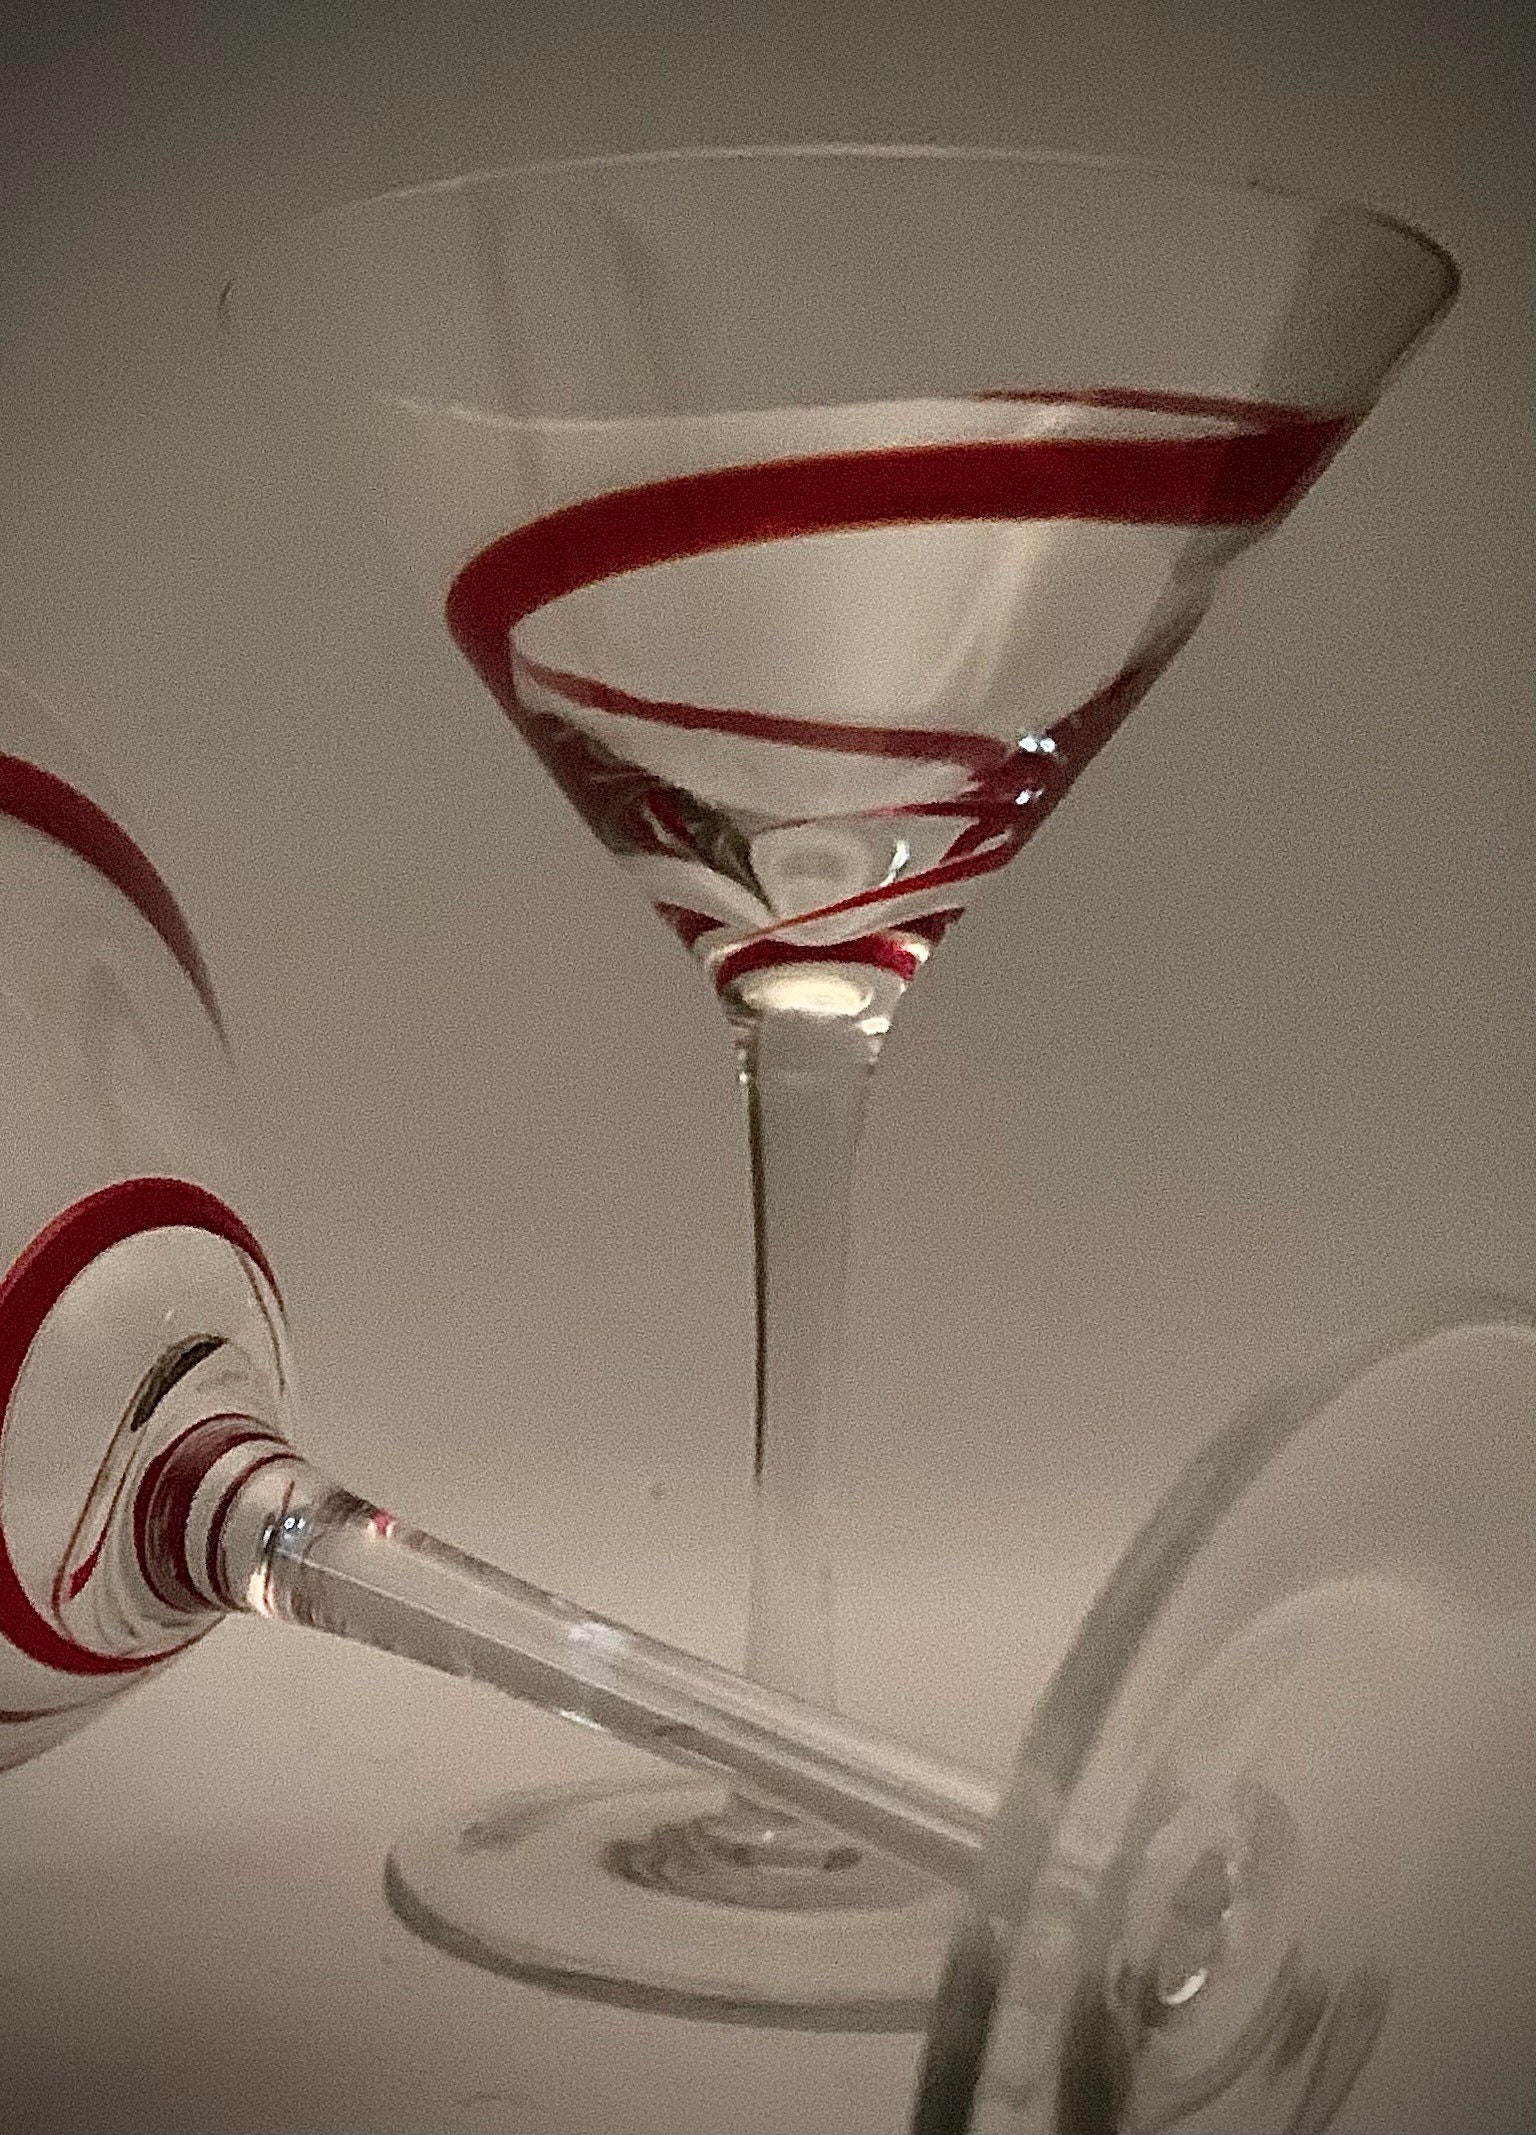 Red swirl glass martini glasses Set of 2